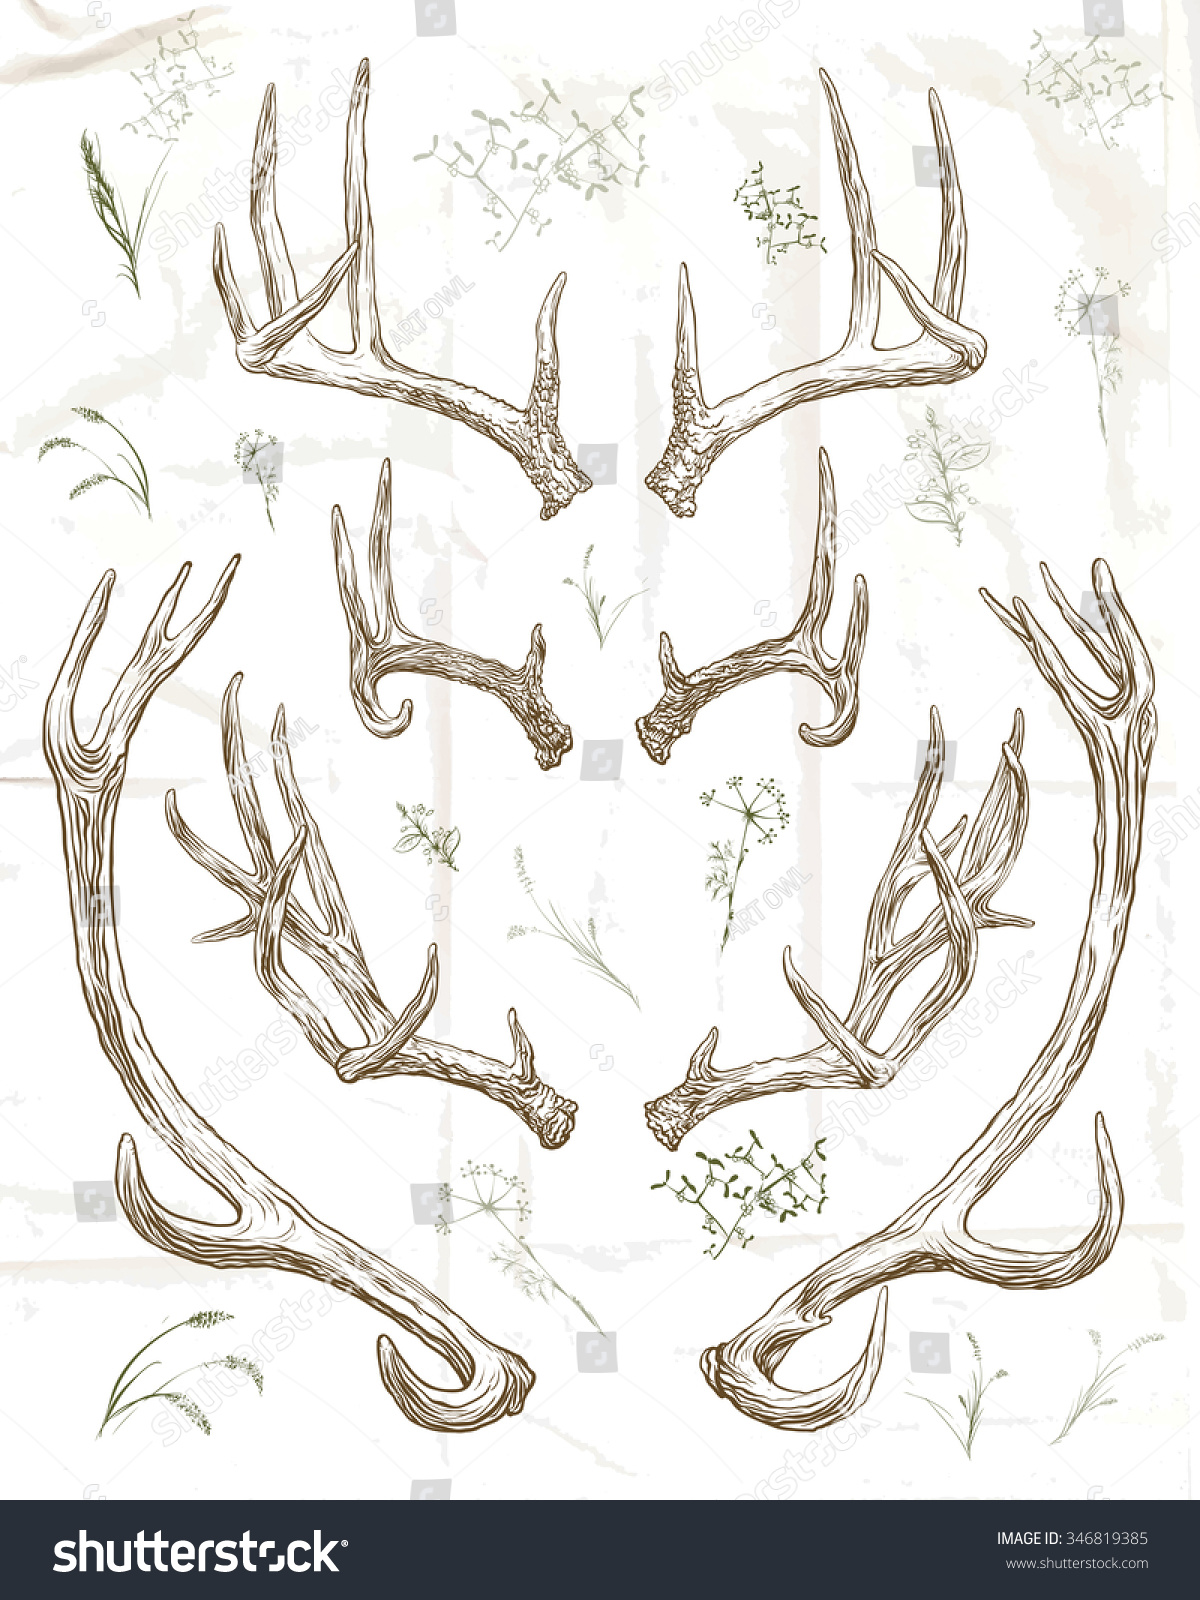 Vector Illustration. Hand Drawing.Deer Horns. - 346819385 : Shutterstock